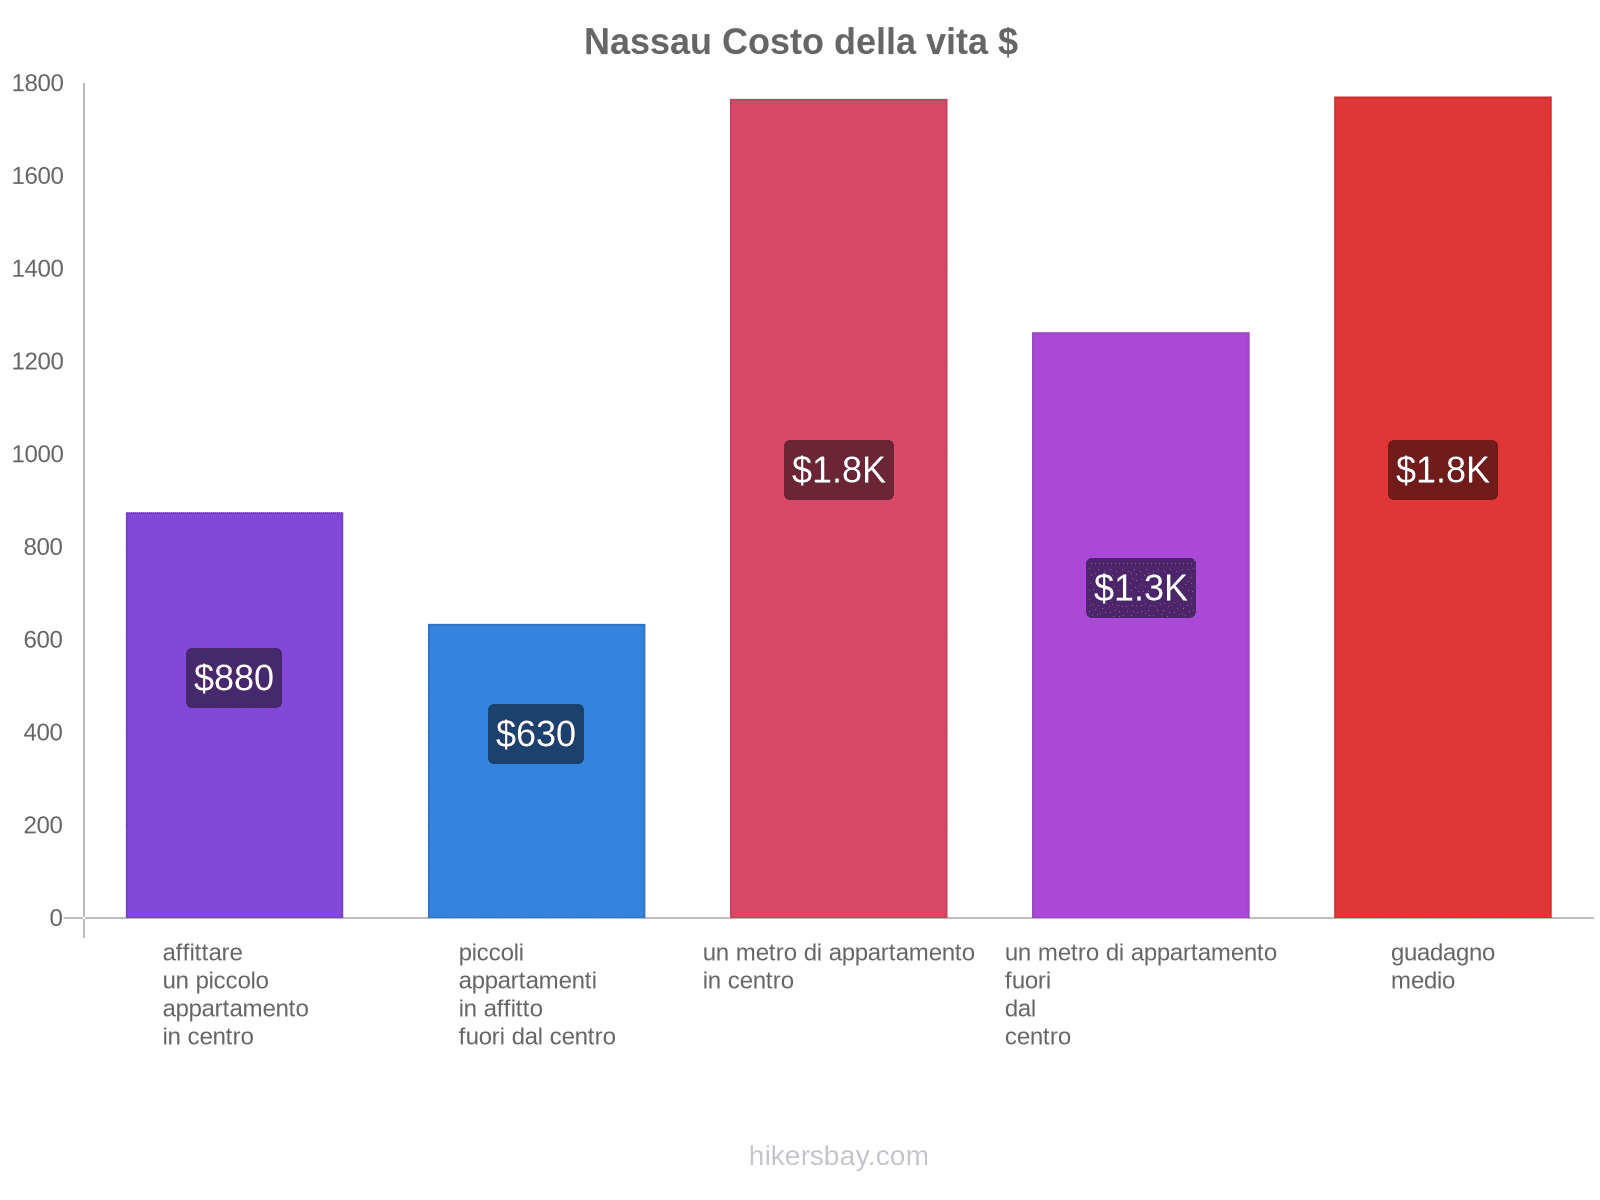 Nassau costo della vita hikersbay.com